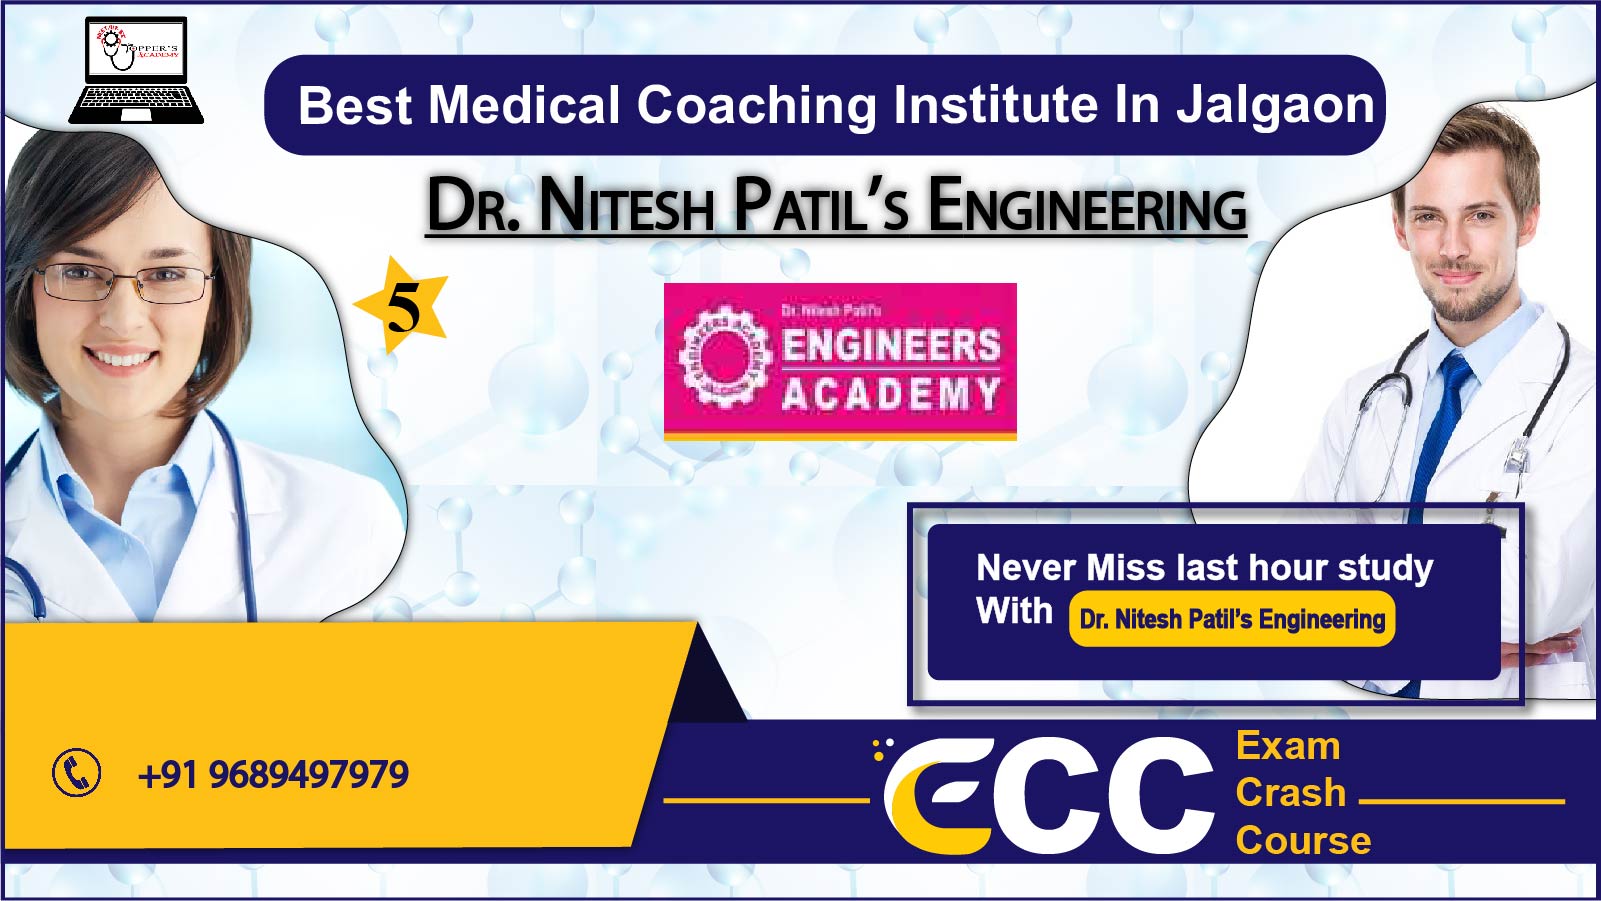 . Dr. Nitesh Patil’s Engineering Academy in Jalgaon